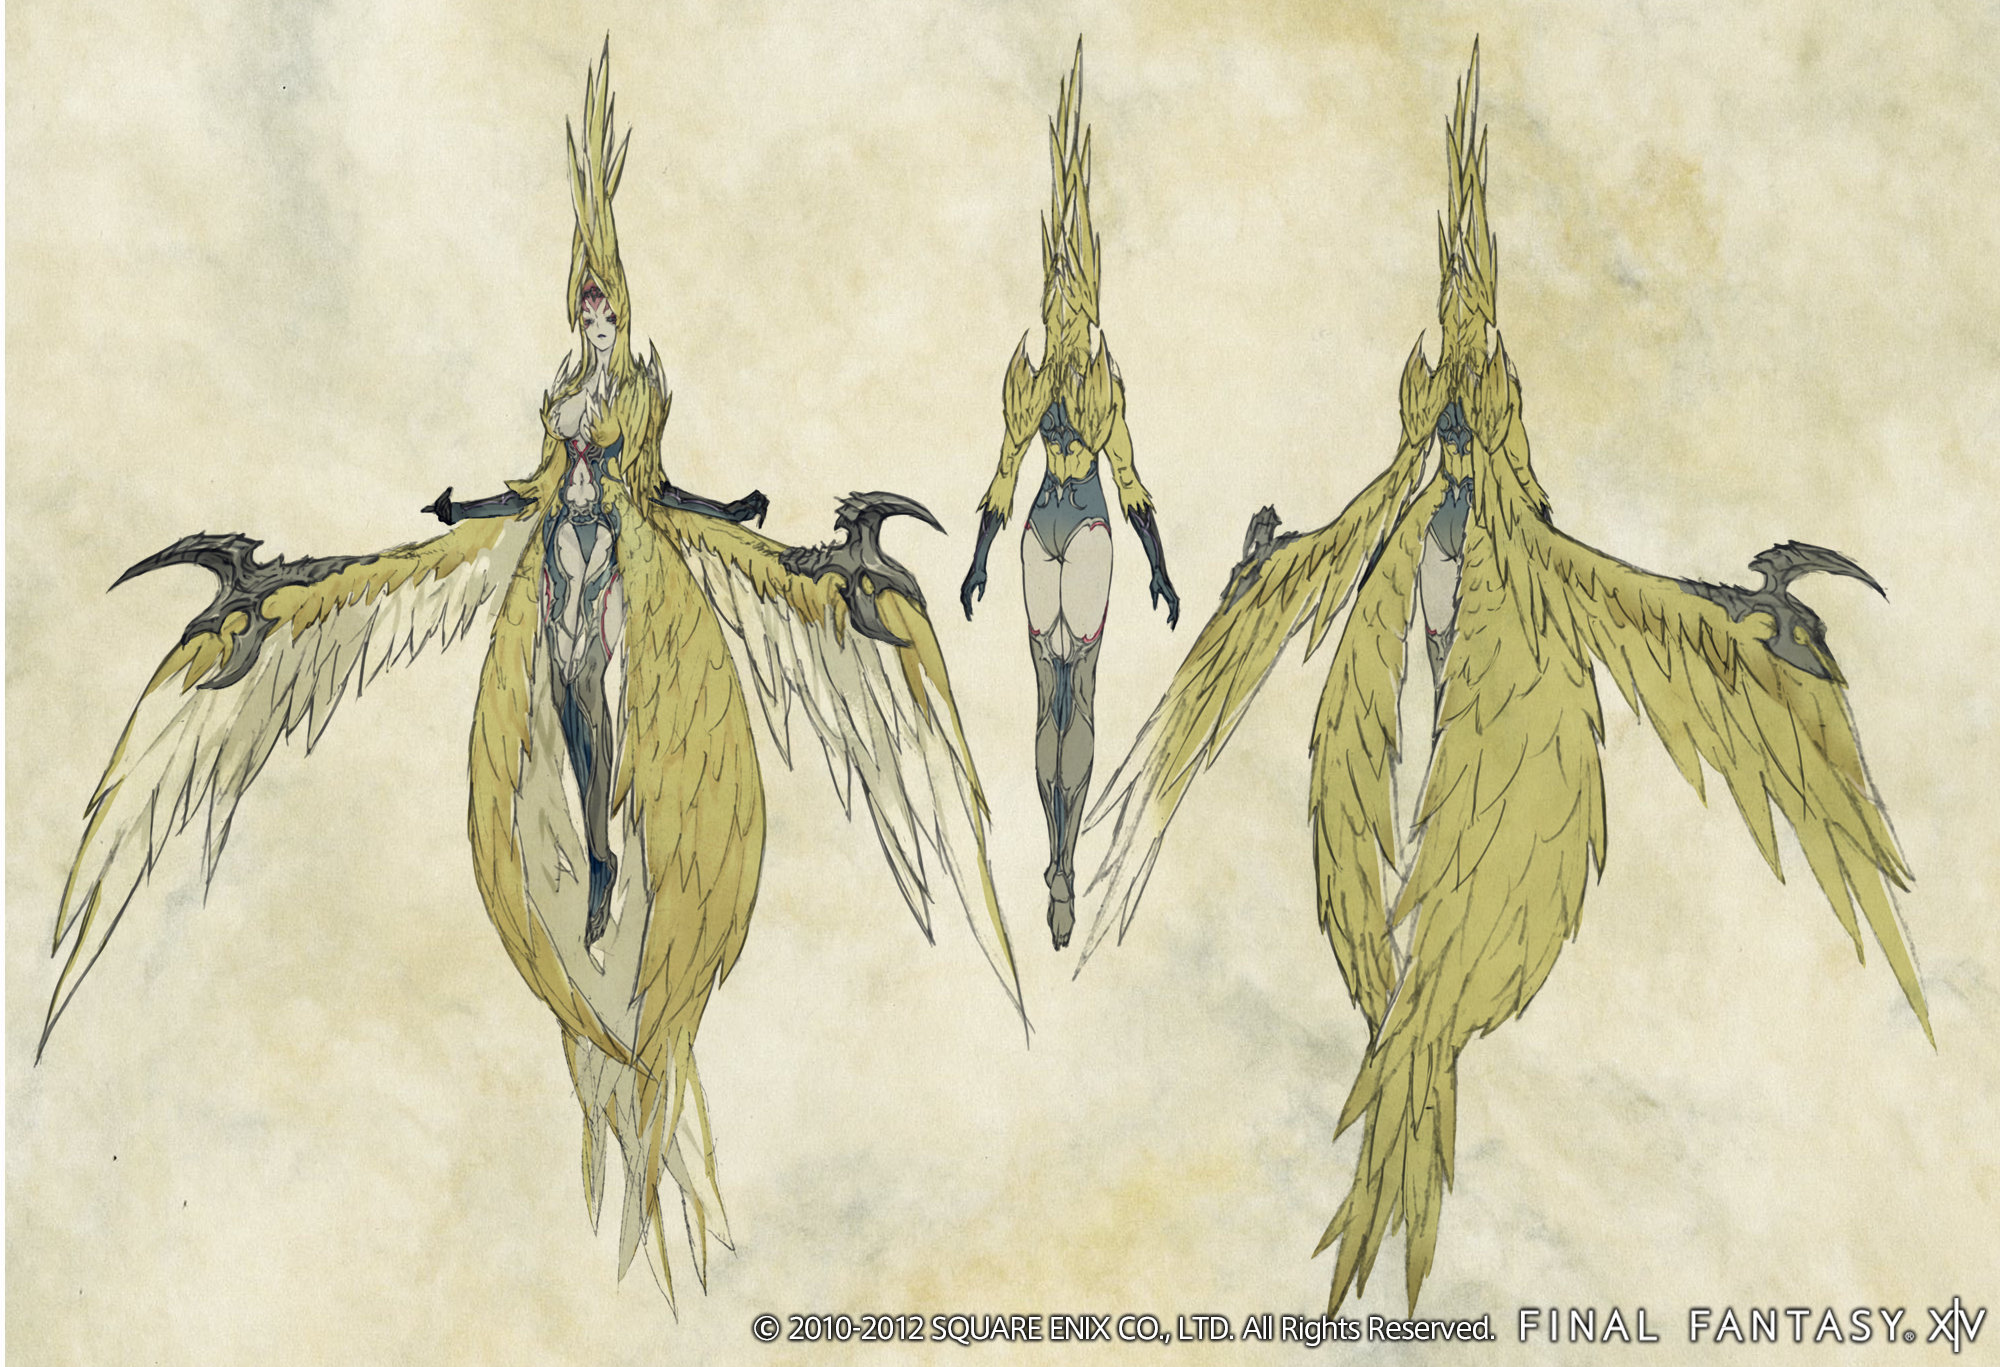 Video Game Final Fantasy XIV: A Realm Reborn HD Wallpaper | Background Image